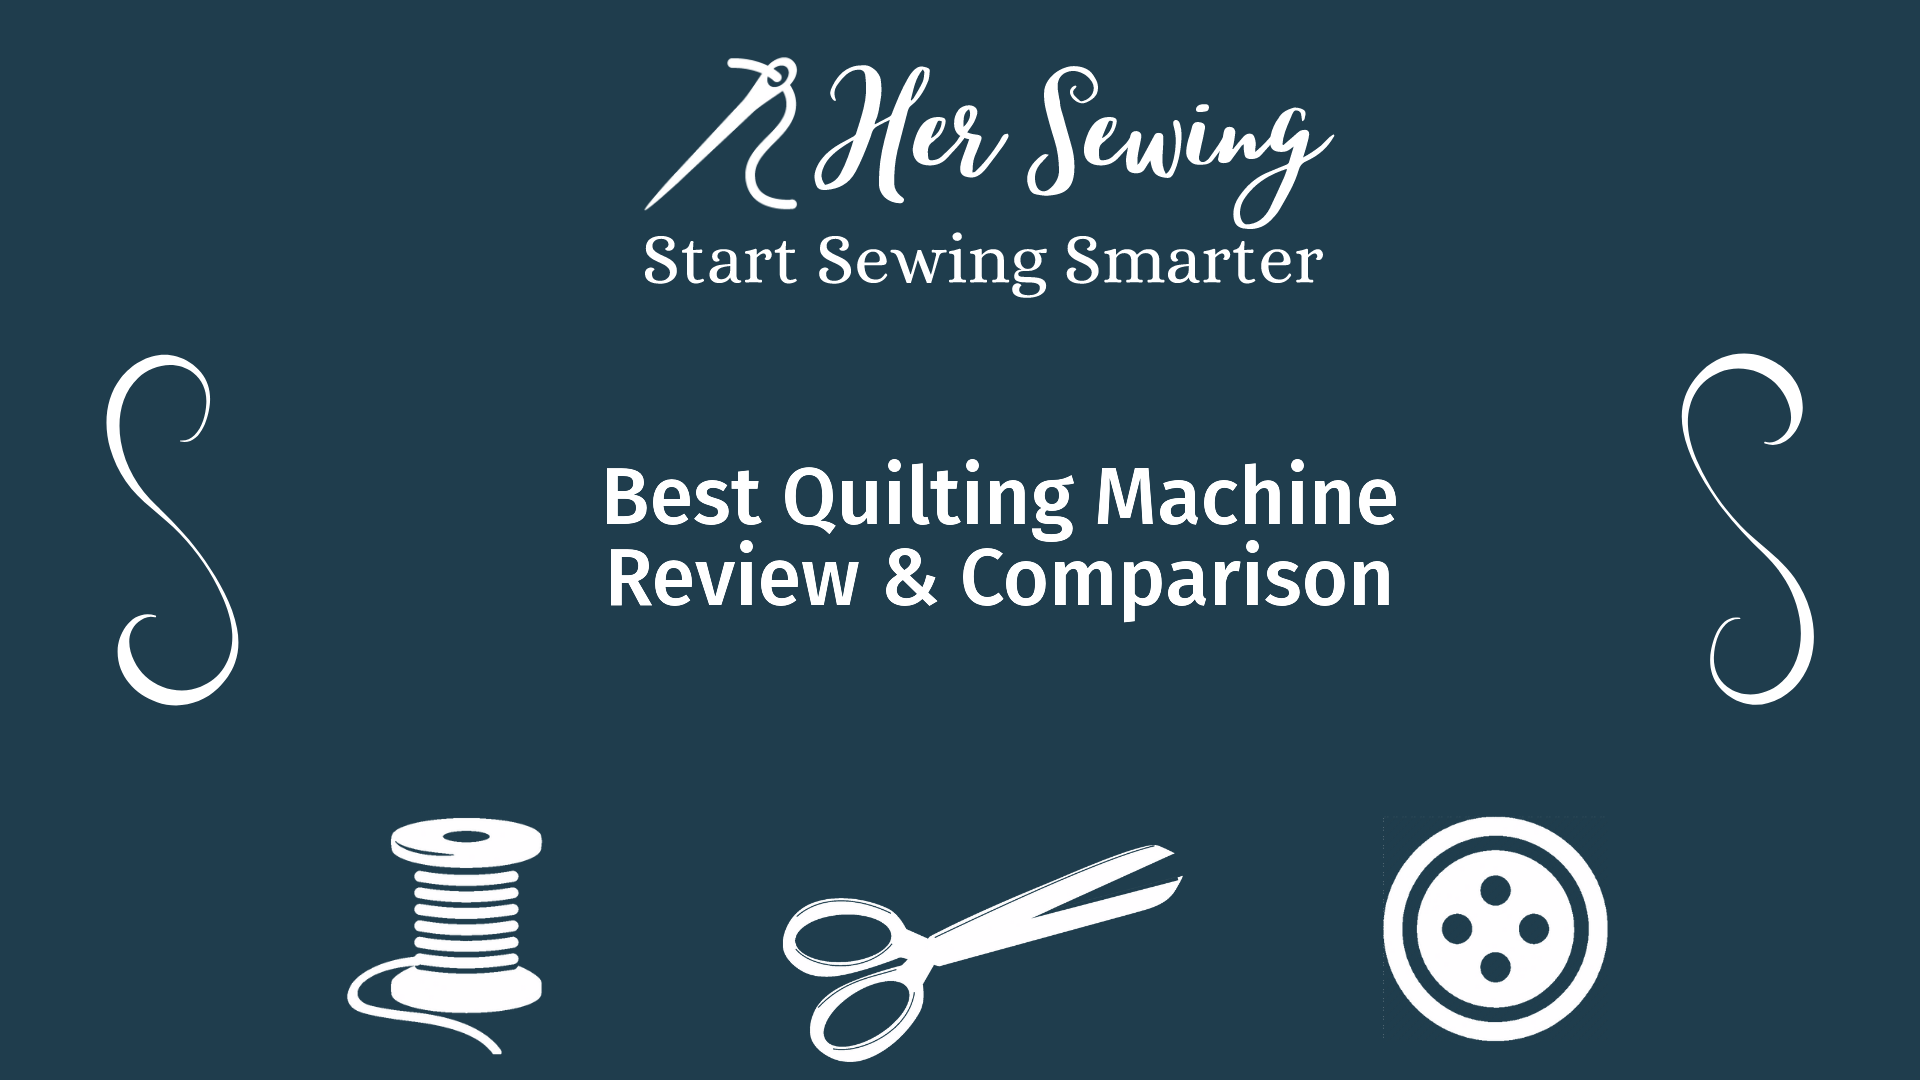 Best Quilting Machine Review & Comparison